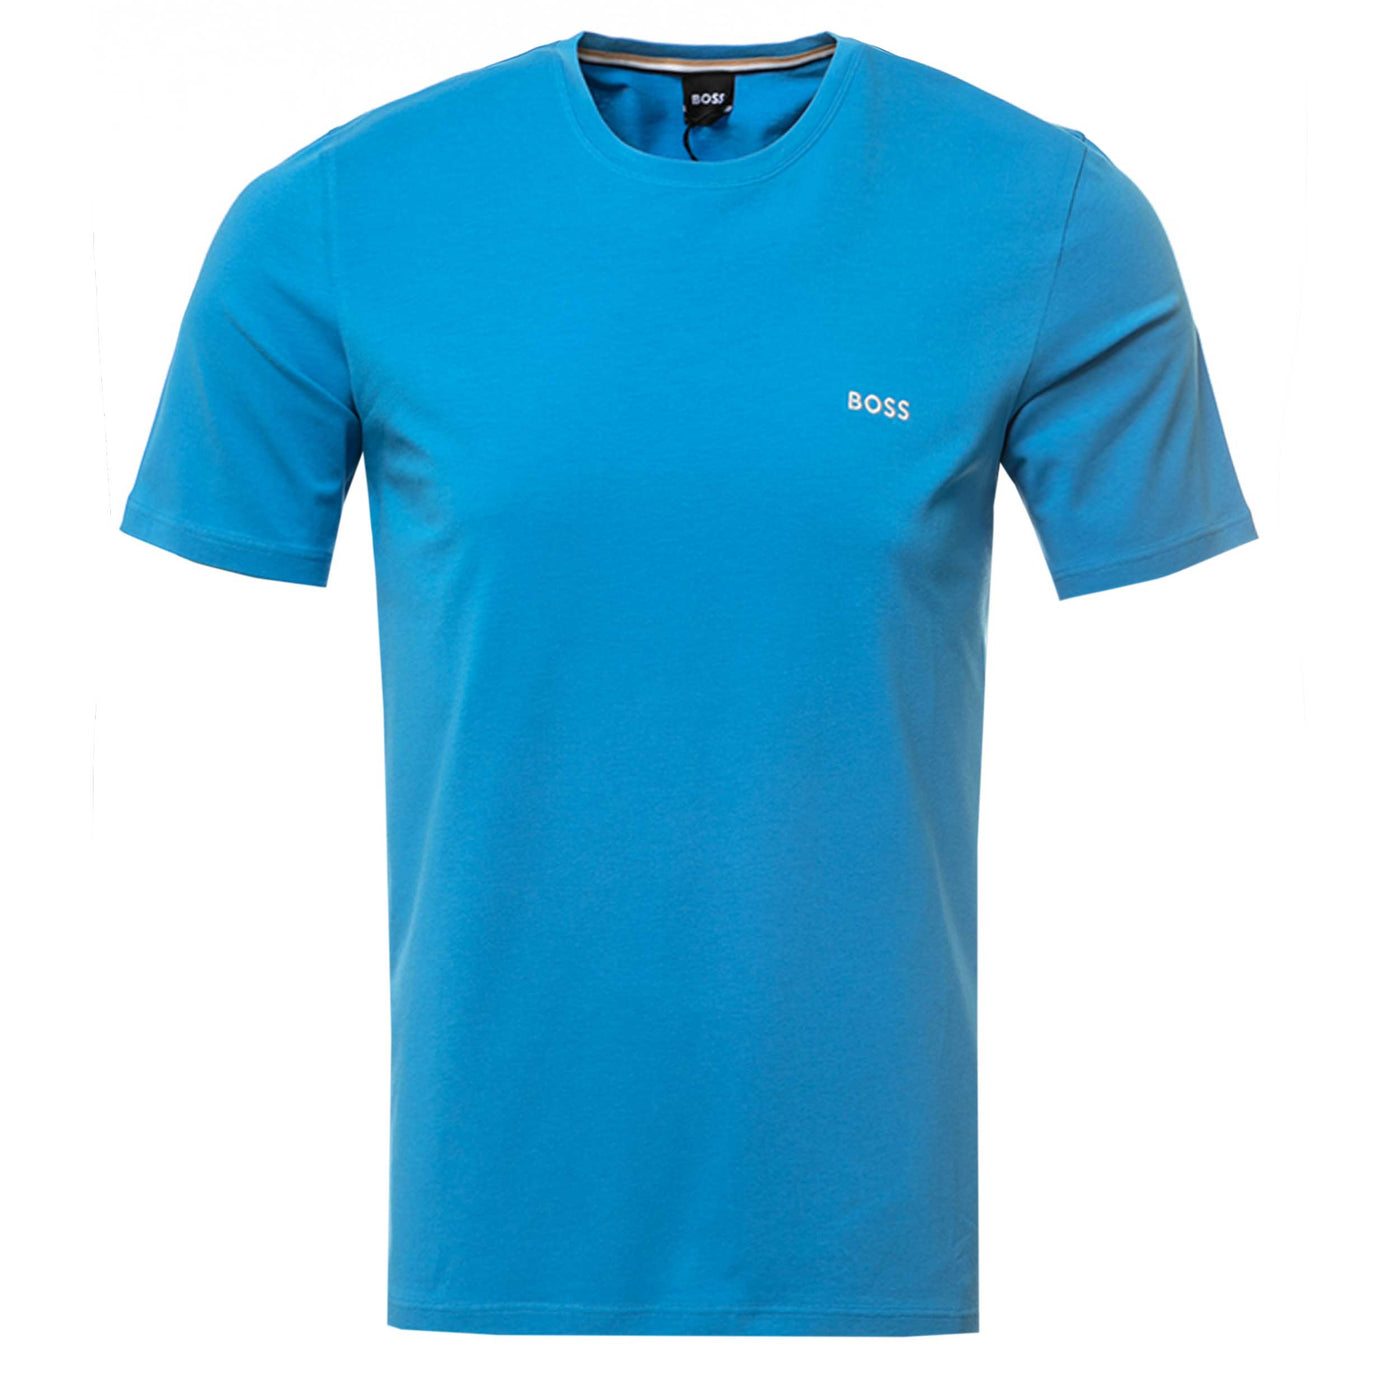 BOSS Mix & Match R T-Shirt in Bright Blue